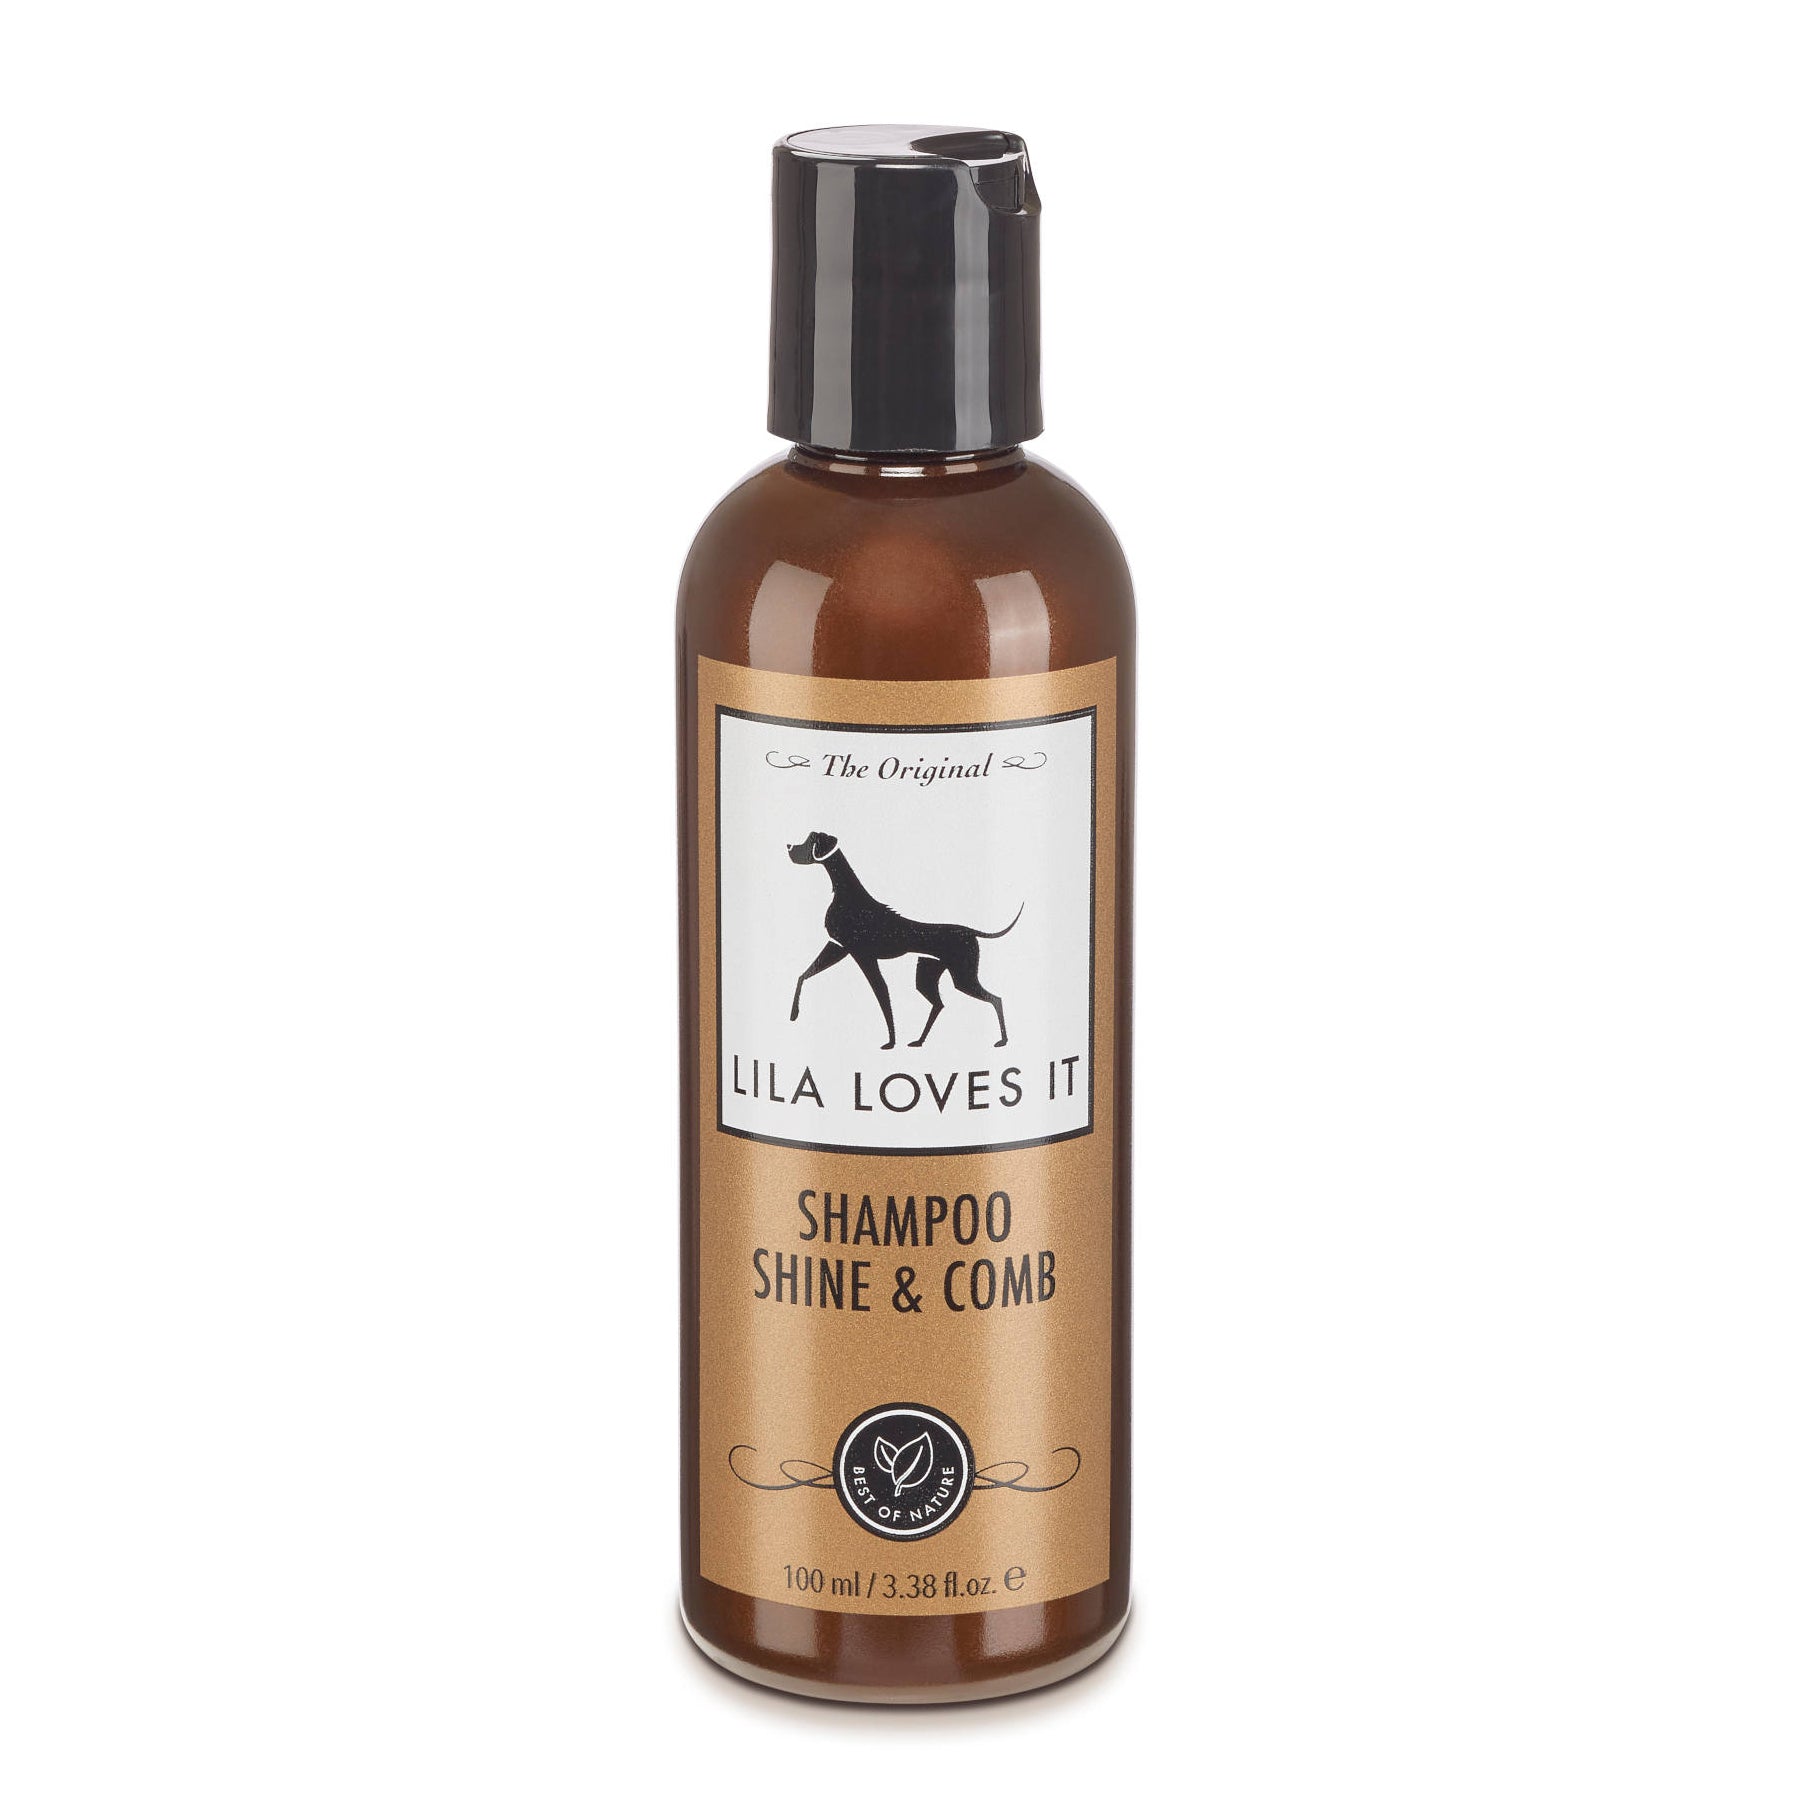 LILA LOVES IT Shampoo Shine & Comb 100 ml